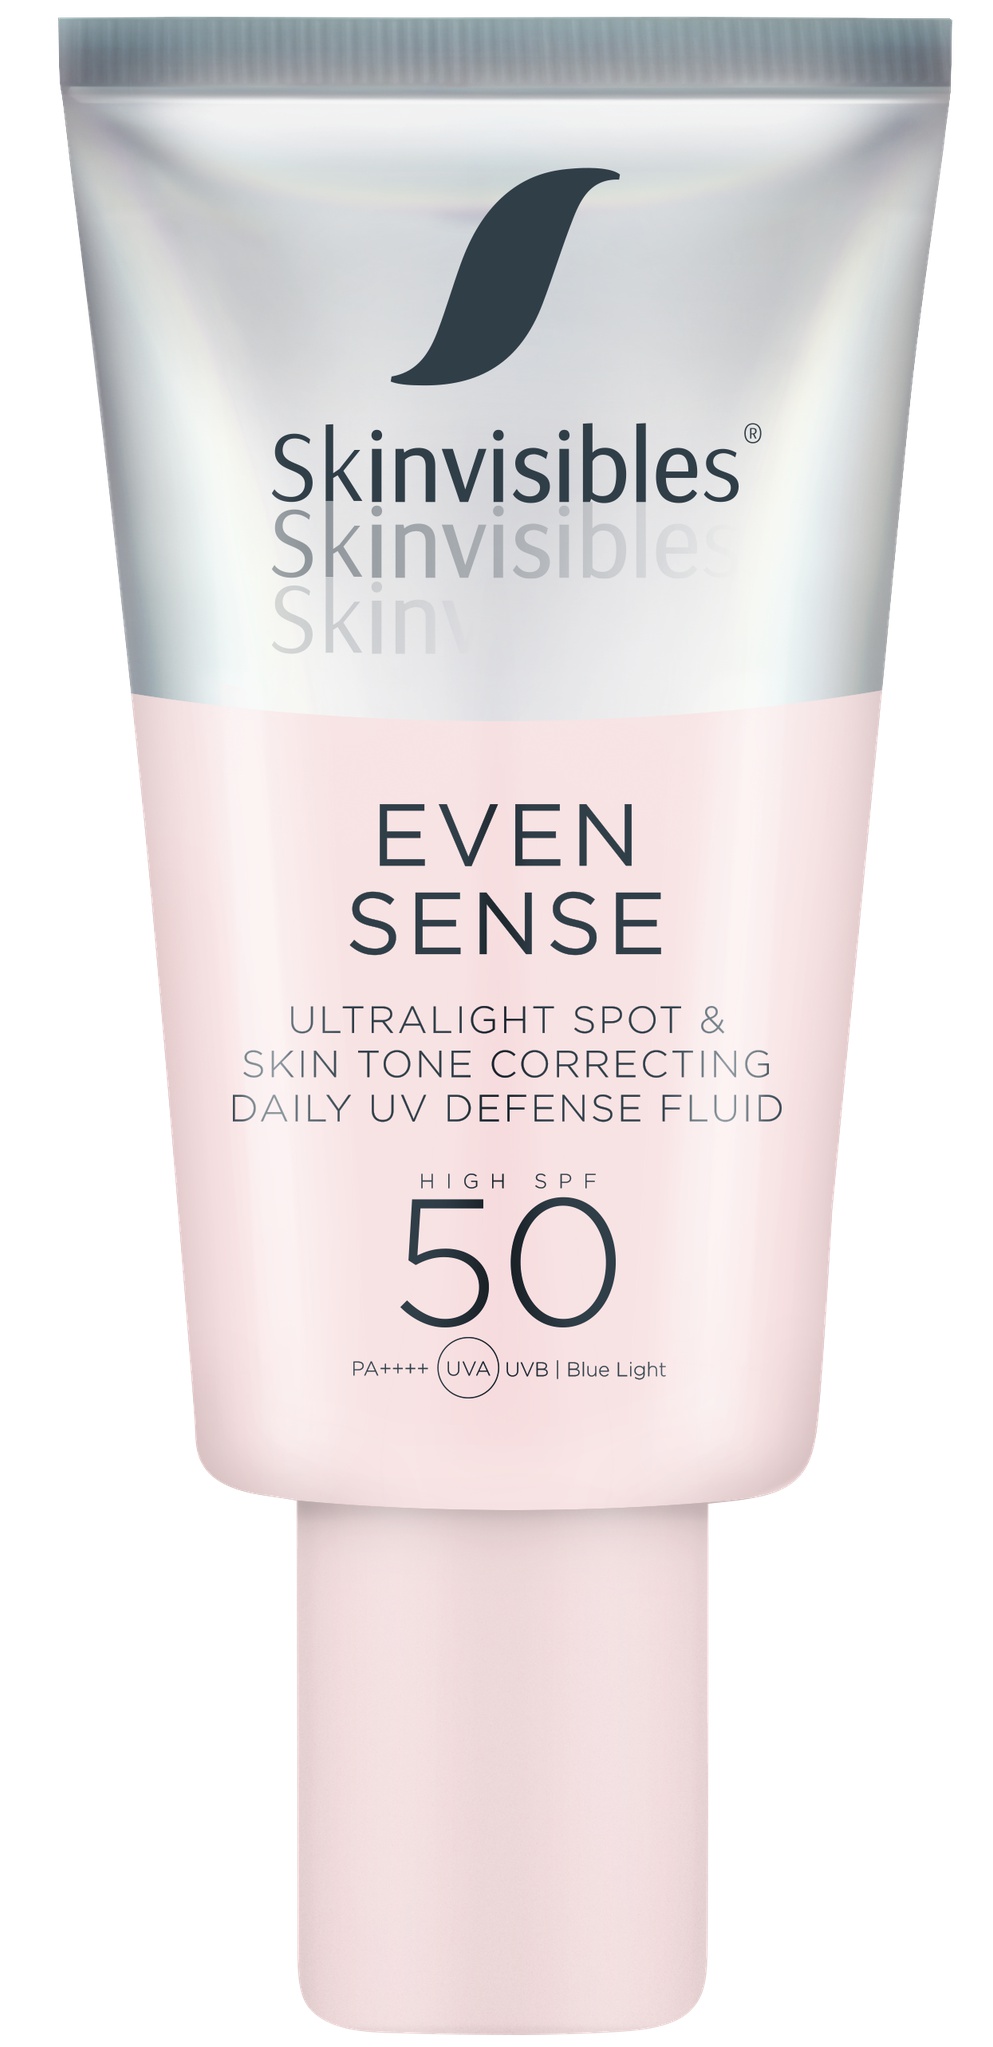 Skinvisibles Even Sense Ultralight Spot & Skin Tone Correcting Daily UV Defense Fluid SPF 50